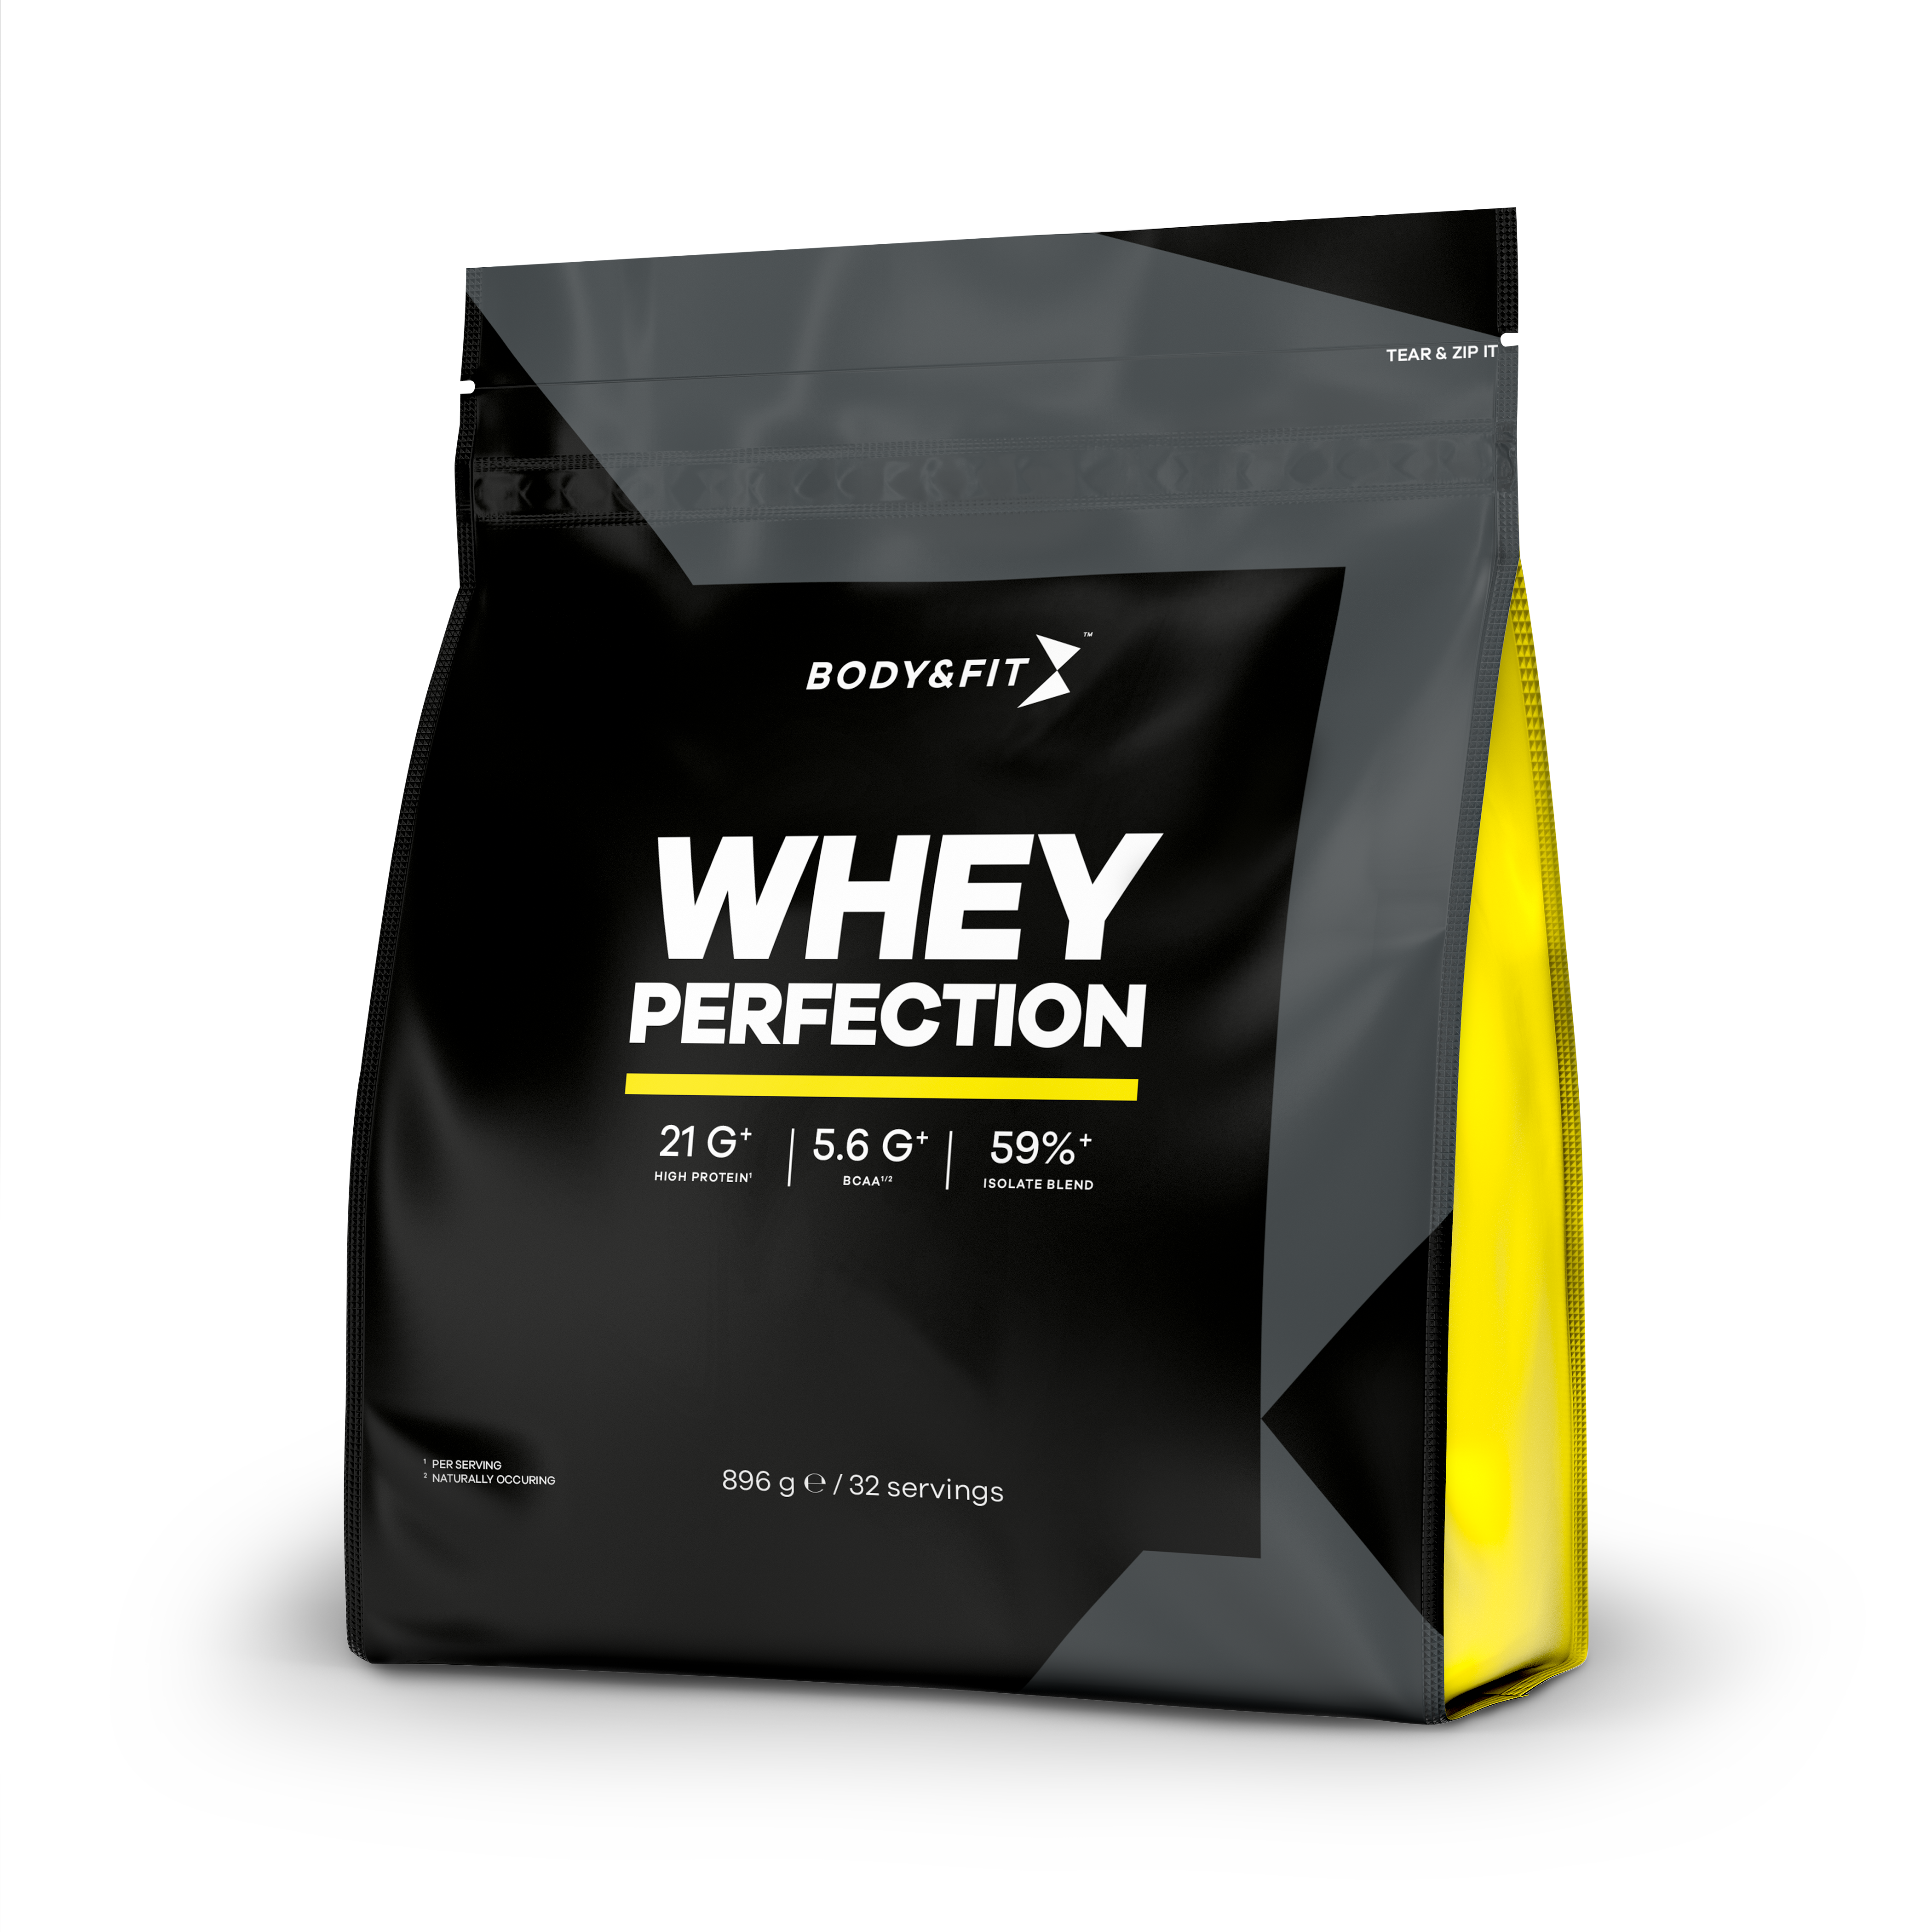 Body & Fit Whey Perfection - Proteine Poeder / Whey Protein - Eiwitshake - 896 gram (32 shakes) - Witte chocolade